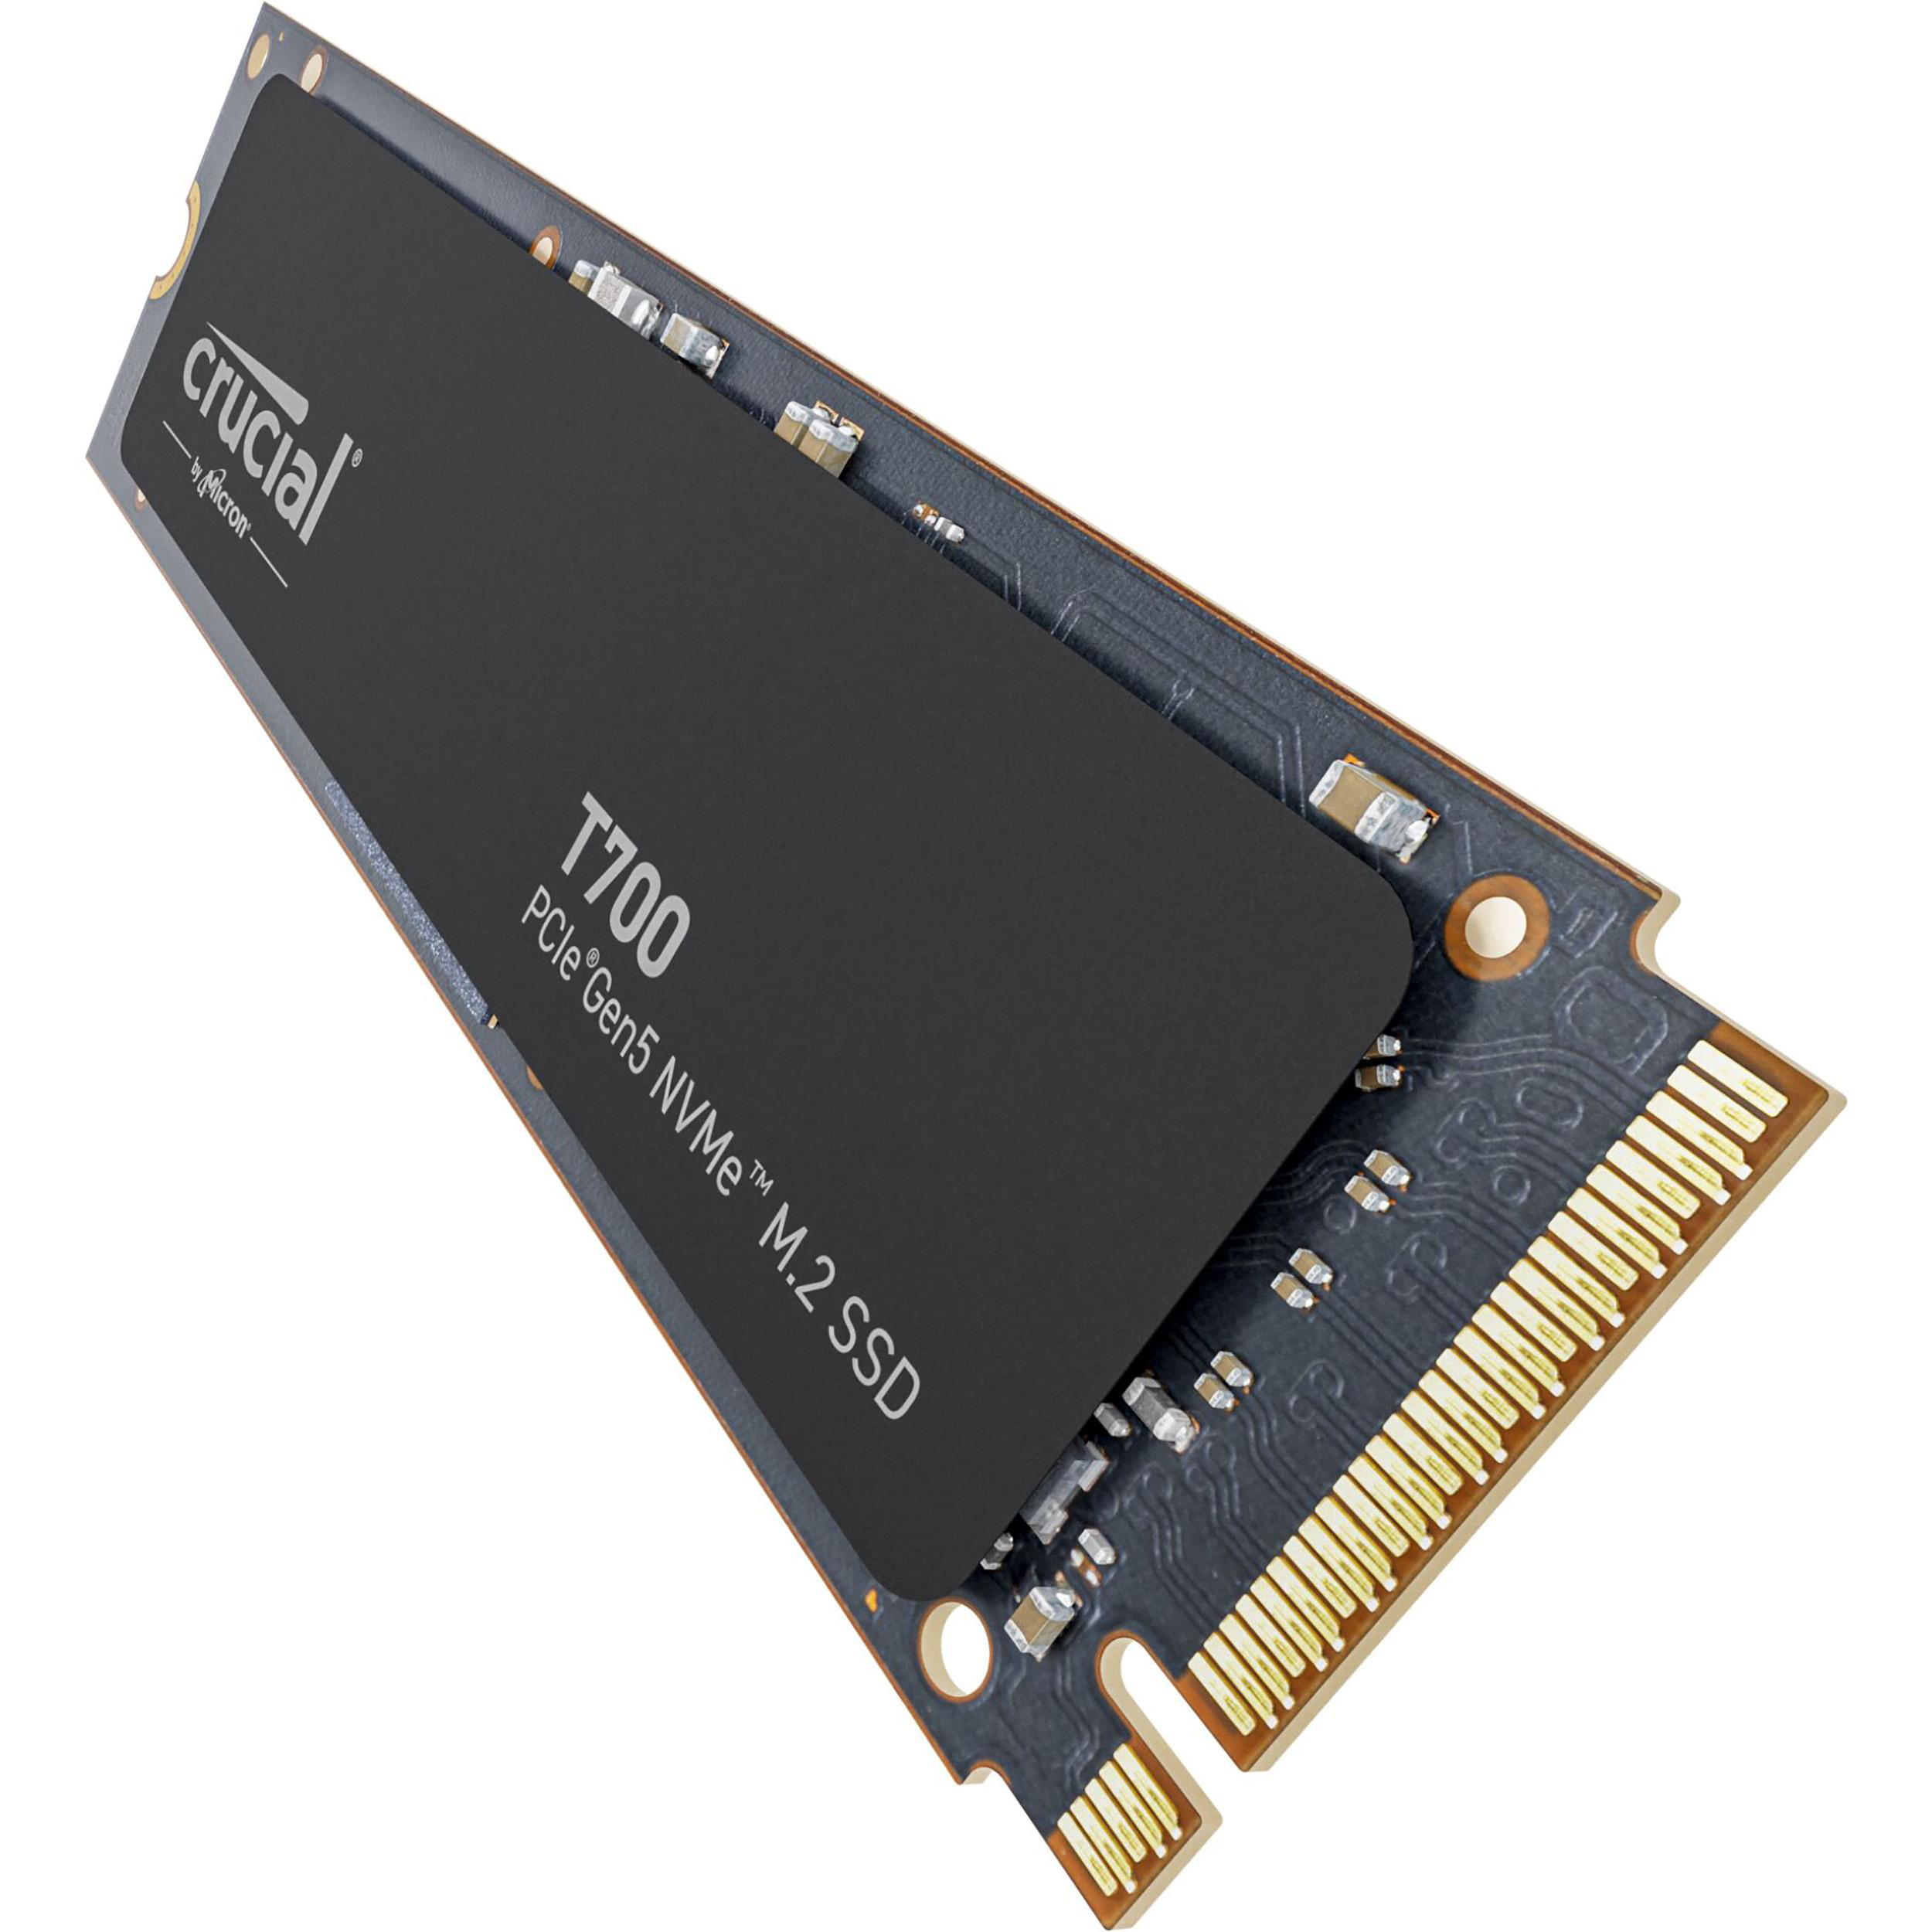 Gen5 SSD, PCIe intern 2 SSD M.2 T700 TB NVMe, NVMe via CRUCIAL